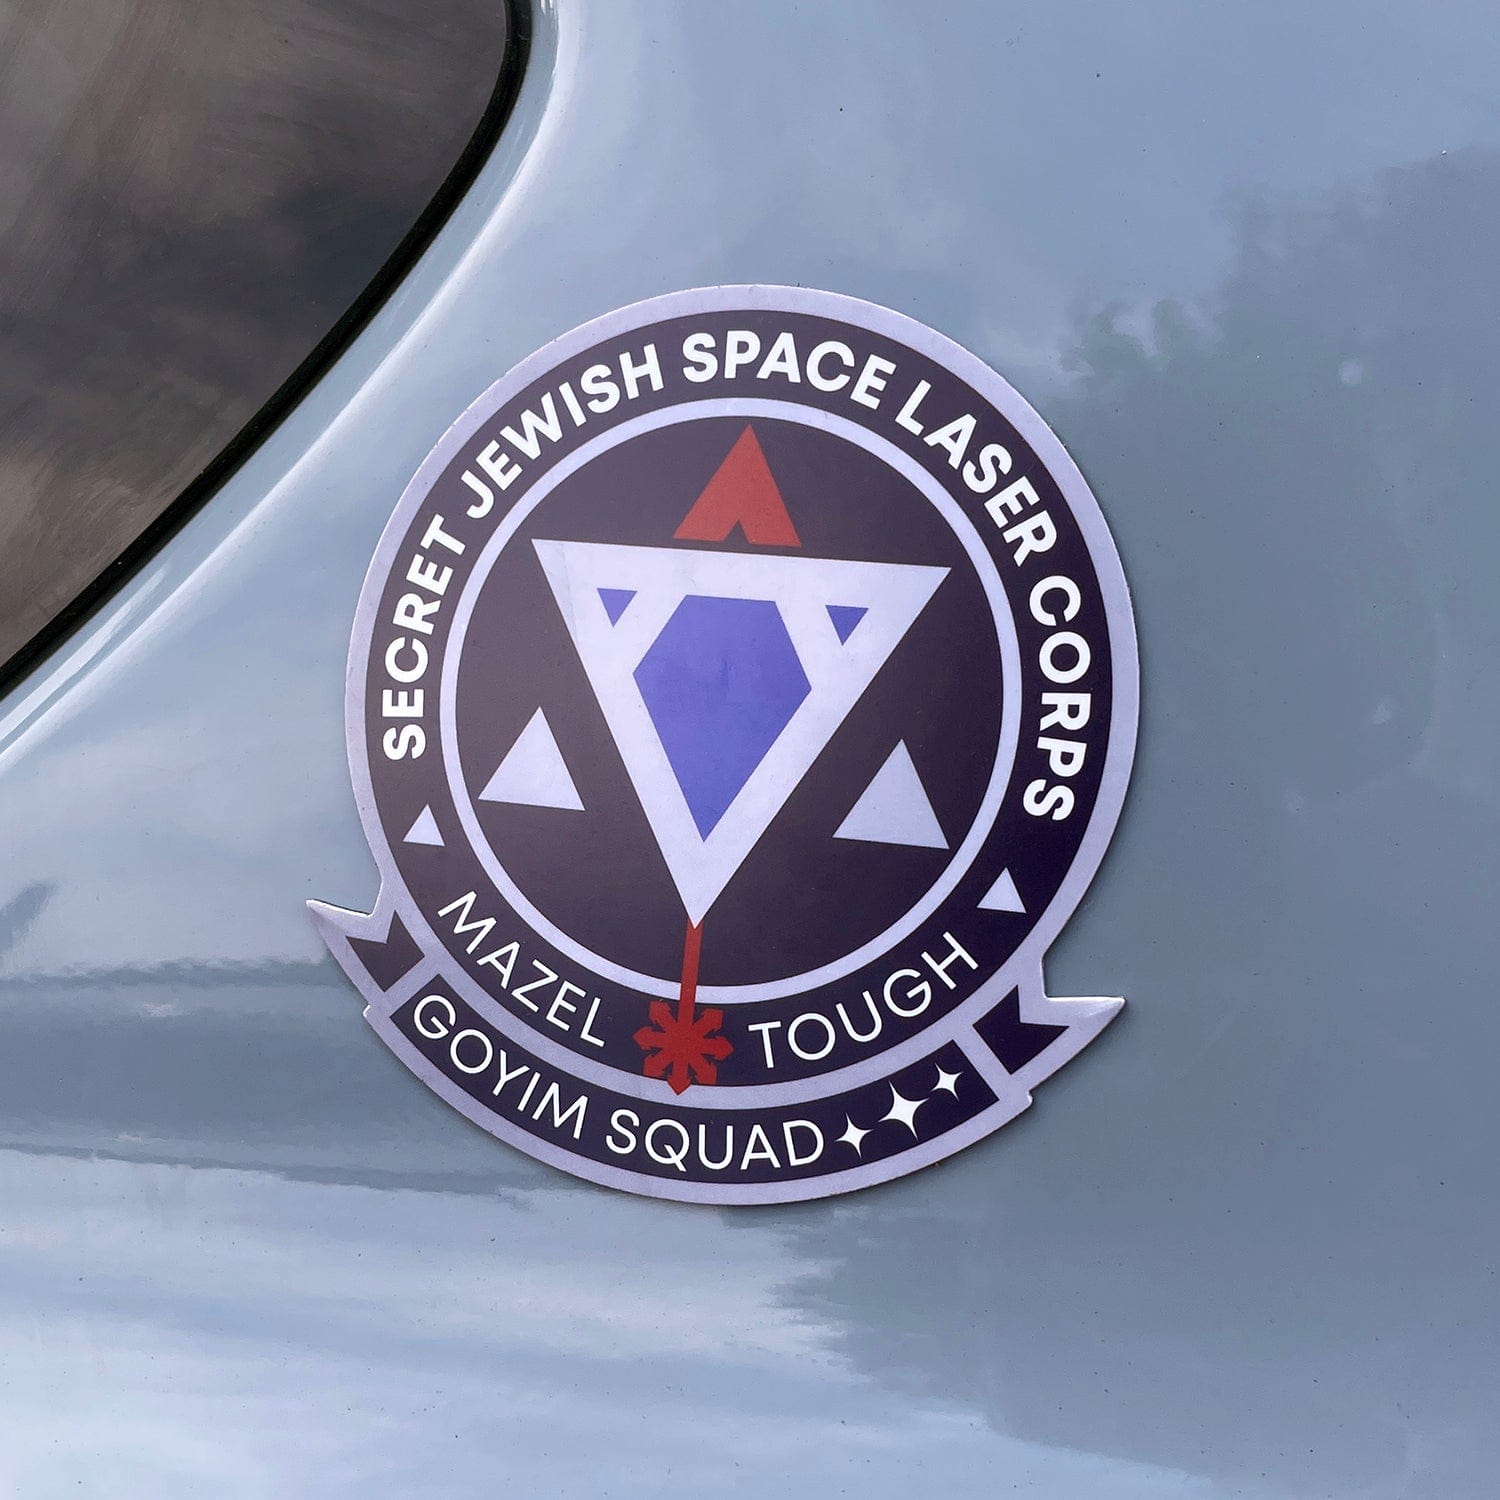 Secret Jewish Space Laser Corps Goyim Squad - Car Magnet